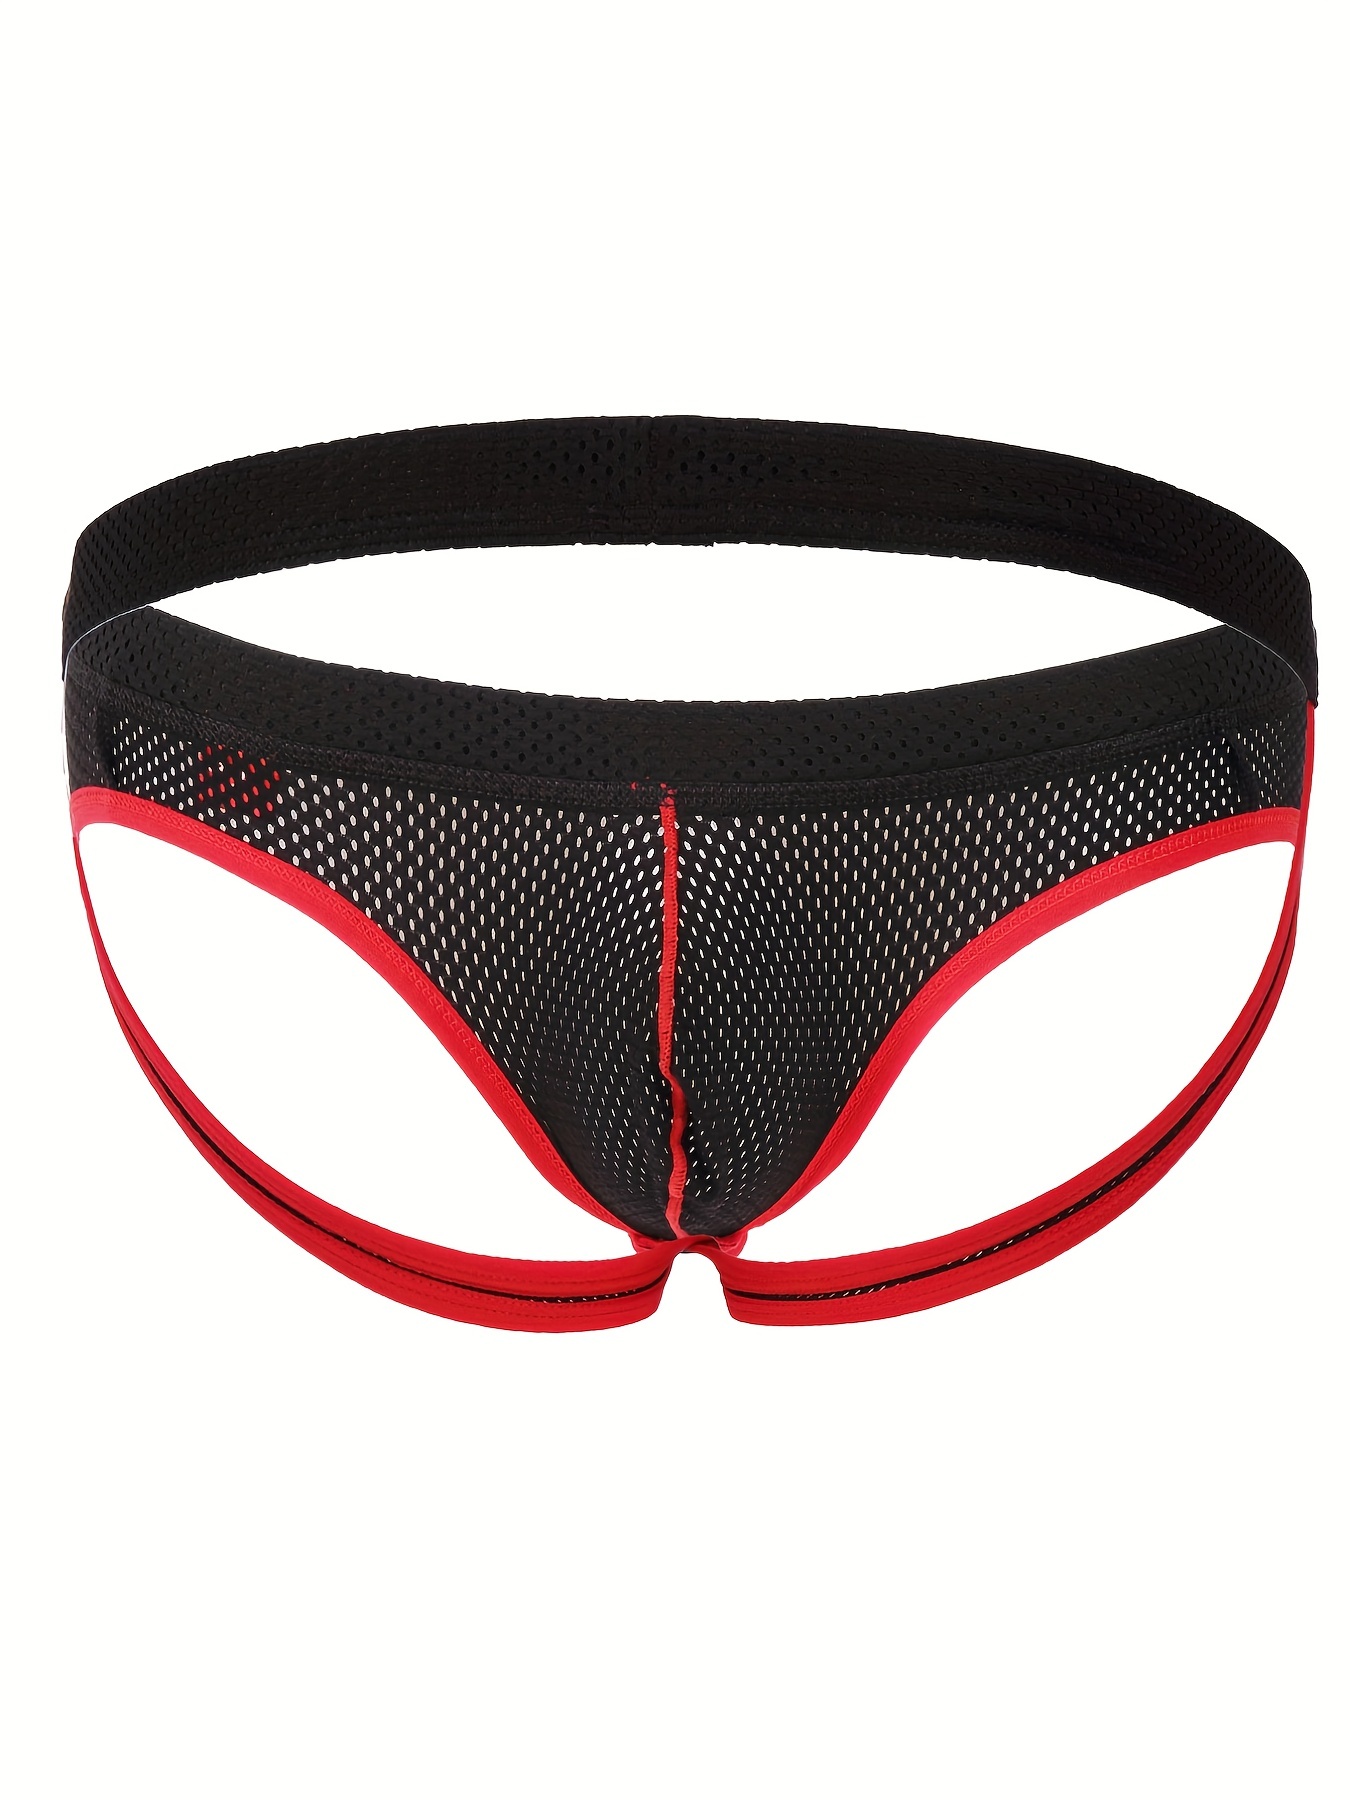 FULLSCHARM Men's Classical Breathable Mesh Jockstrap Underwear Ideal  Athletic Supporter, Black/White/Red, Medium : : Sports & Outdoors